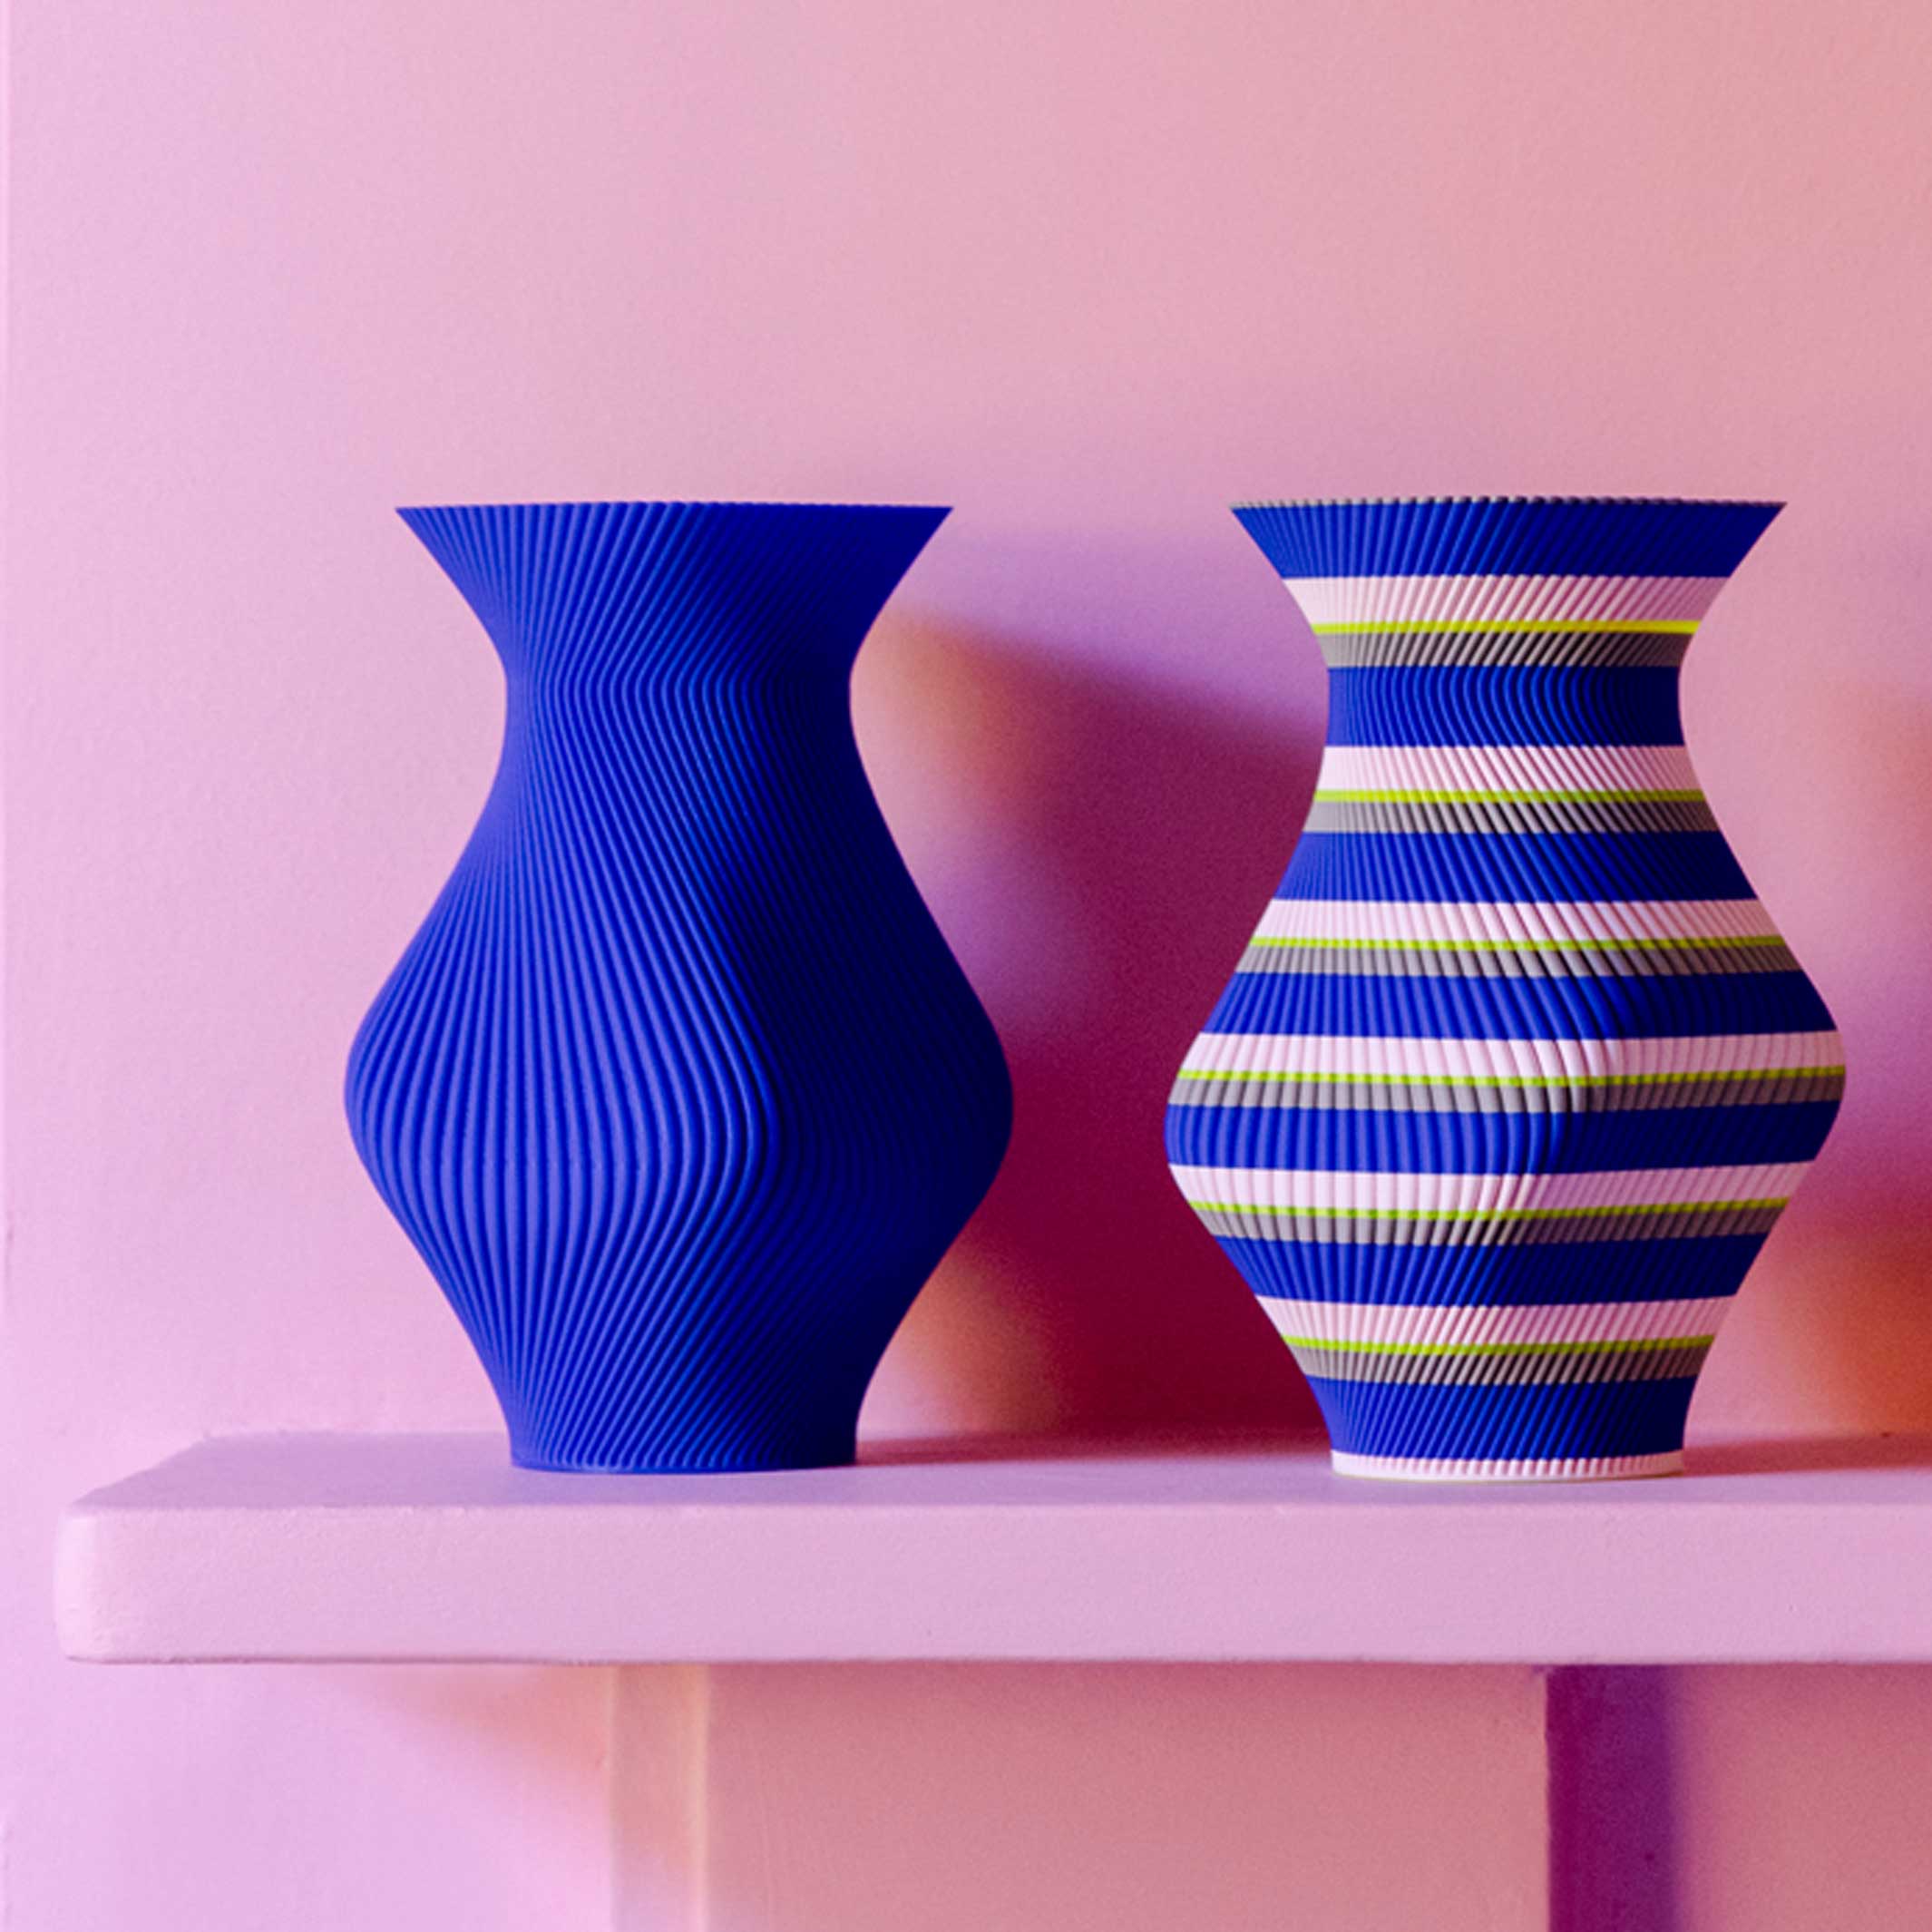 FLARE VASE Blue | 3D printed VASE with inner glass vase | 20 cm high | The Edge Collection | Sheyn